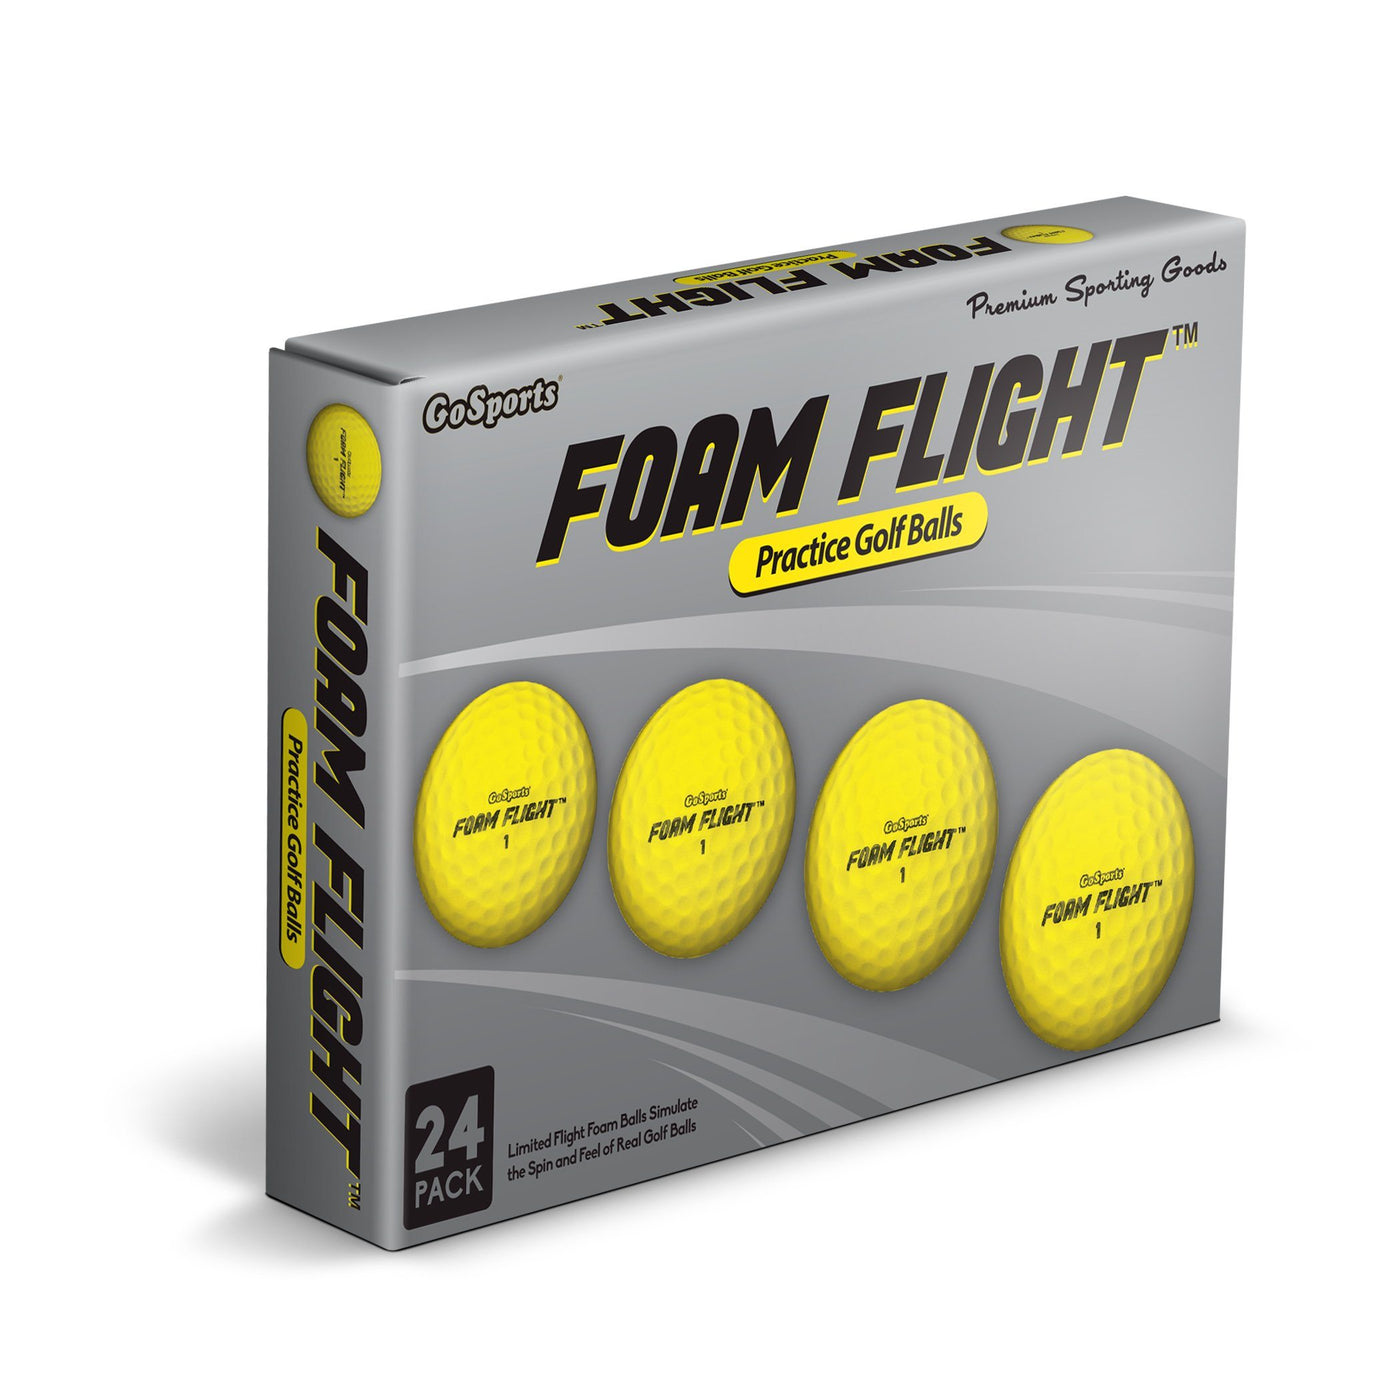 GoSports Foam Flight Practice Golf Balls 24 Pack - Yellow â playgosports.com